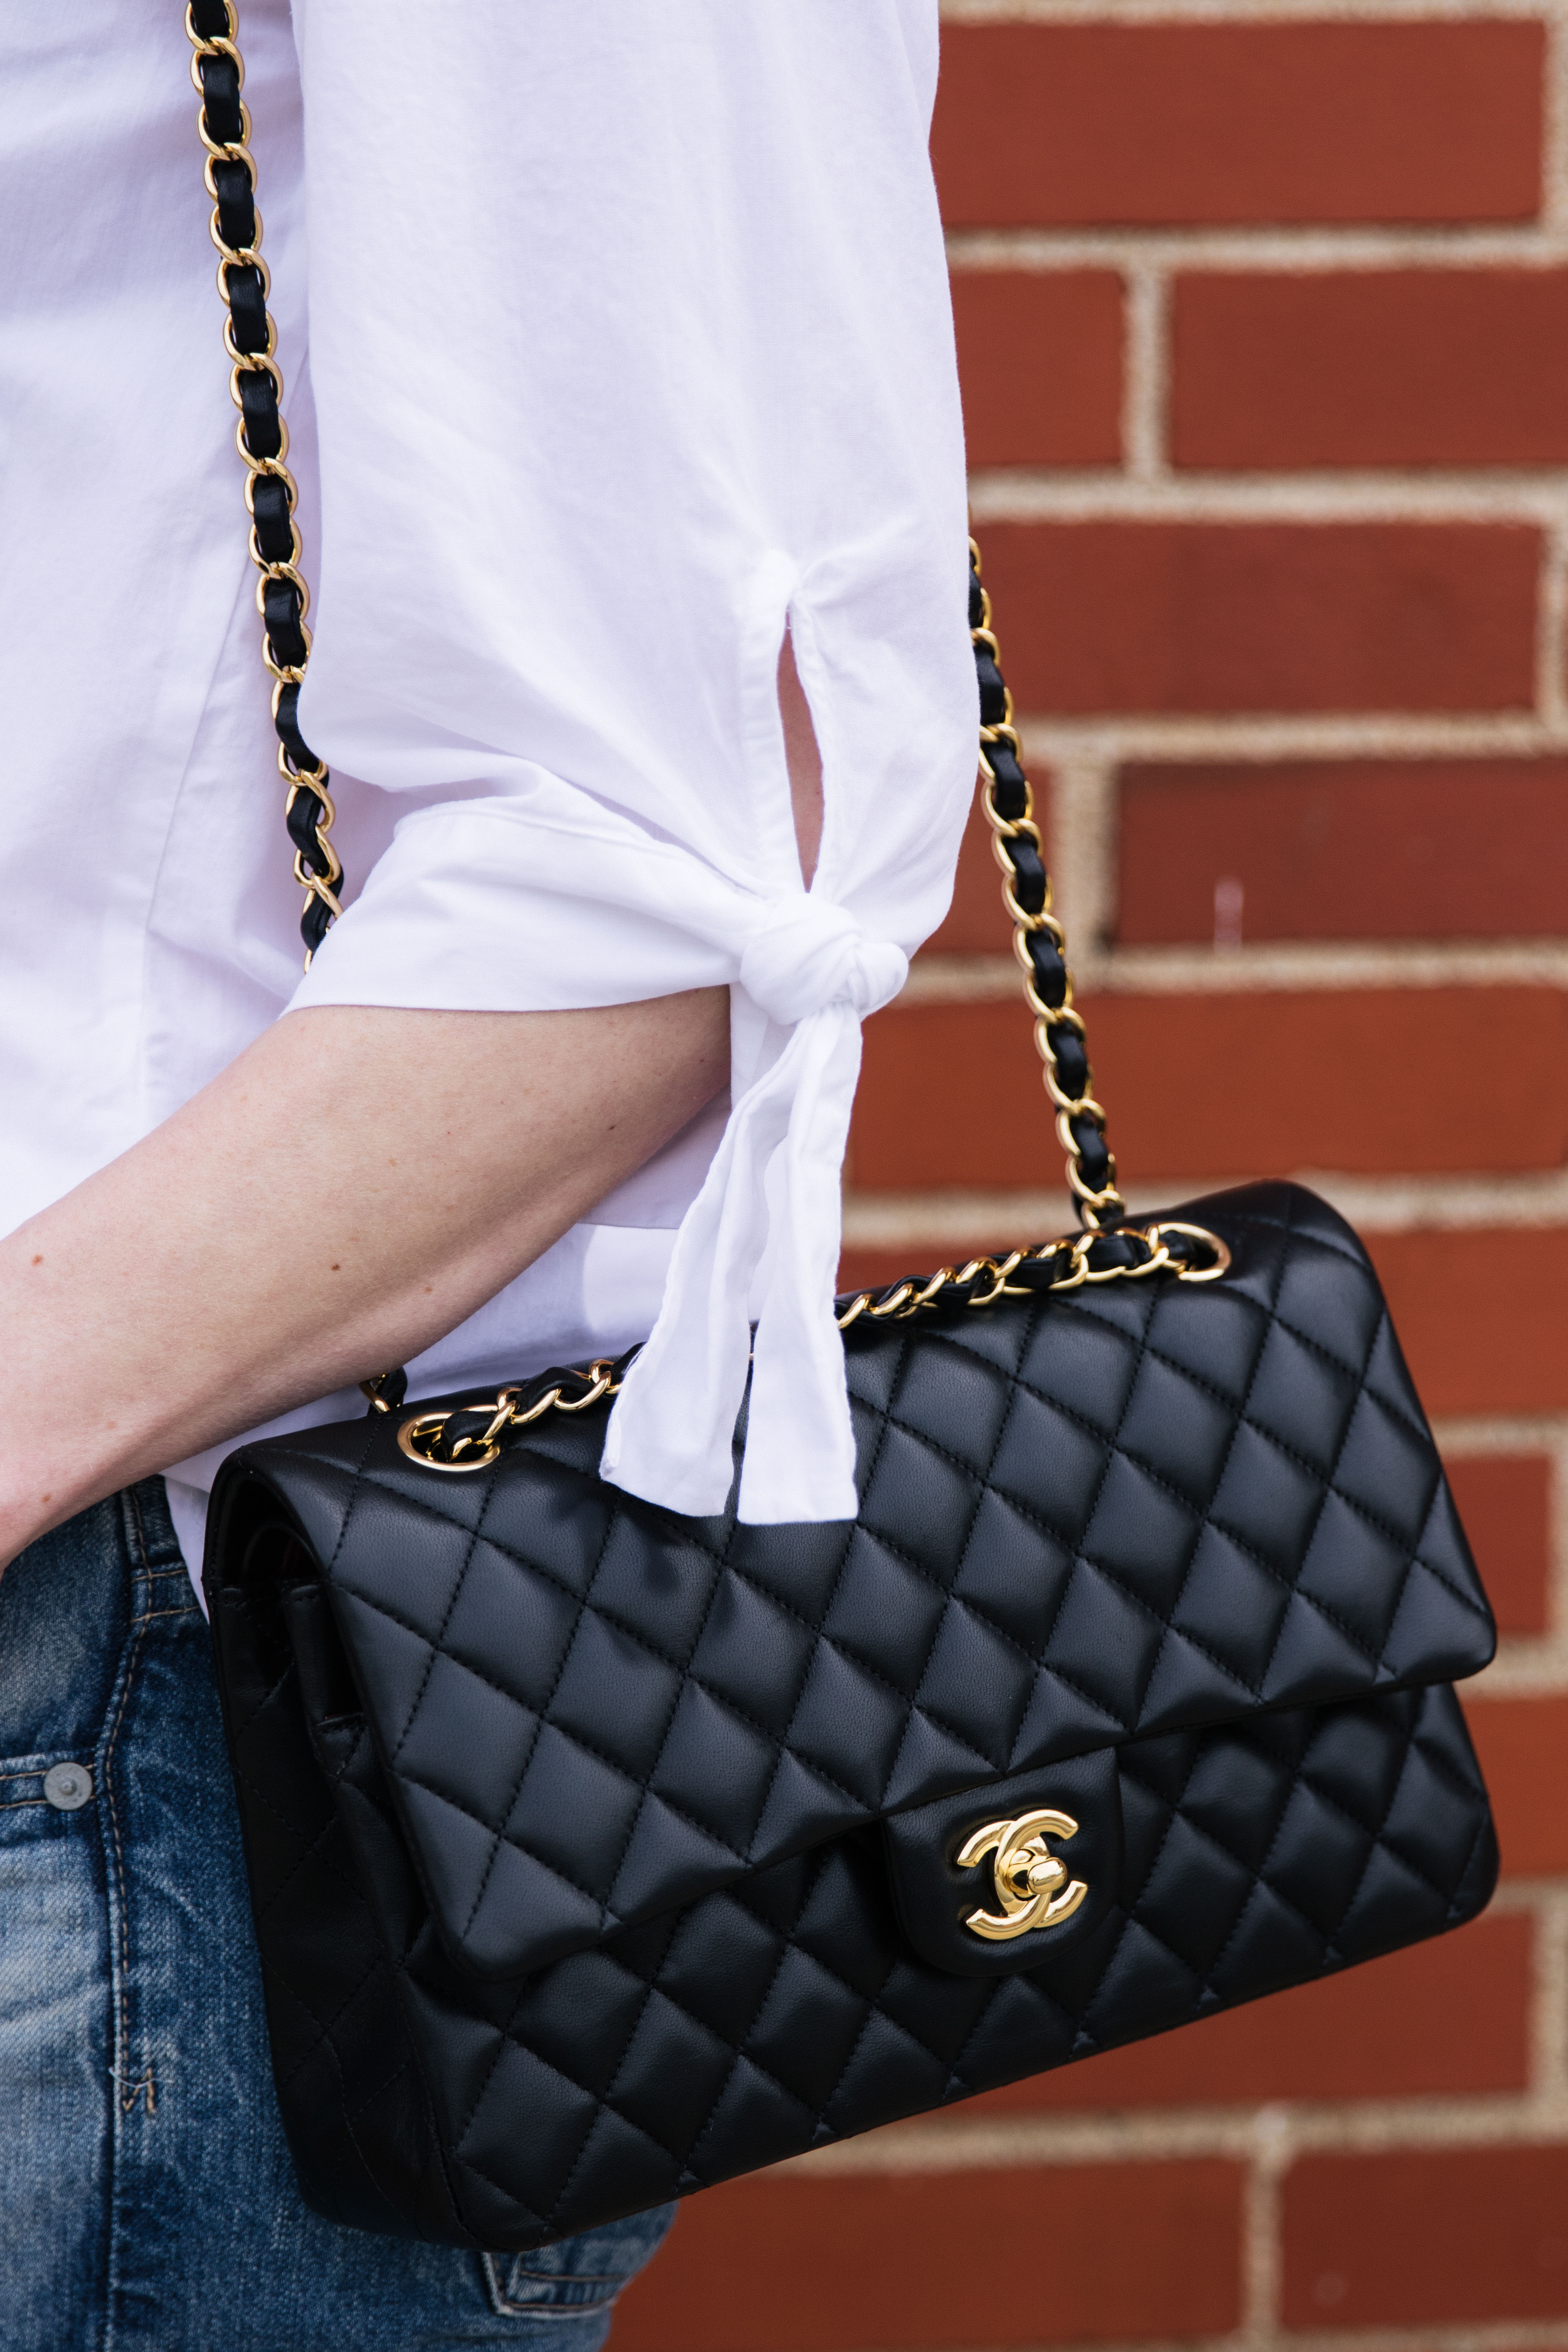 Chanel medium classic flap bag black lambskin with gold hardware, tie